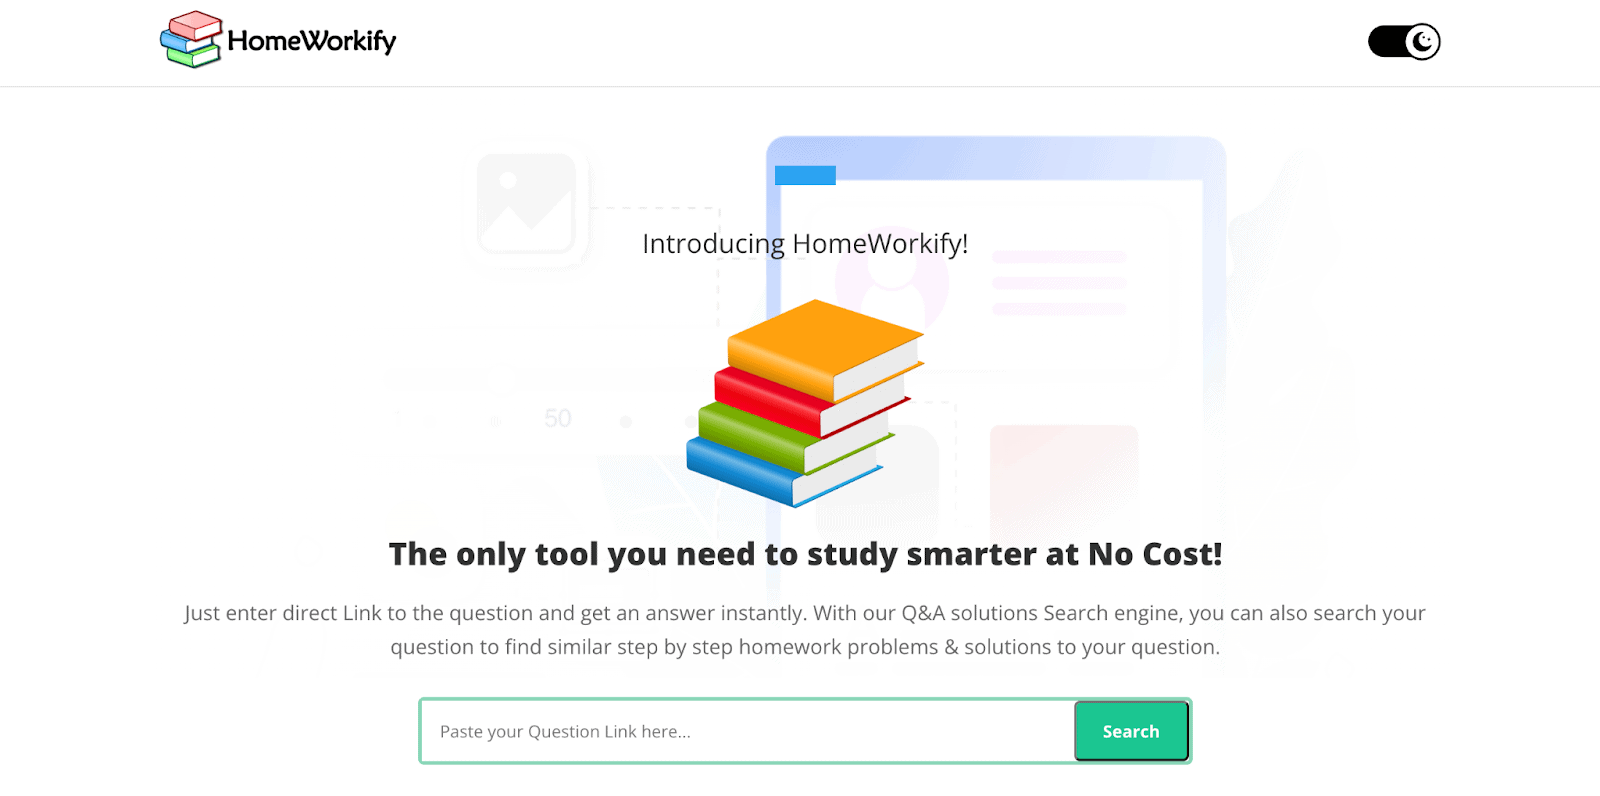 Homeworkify home page screenshot